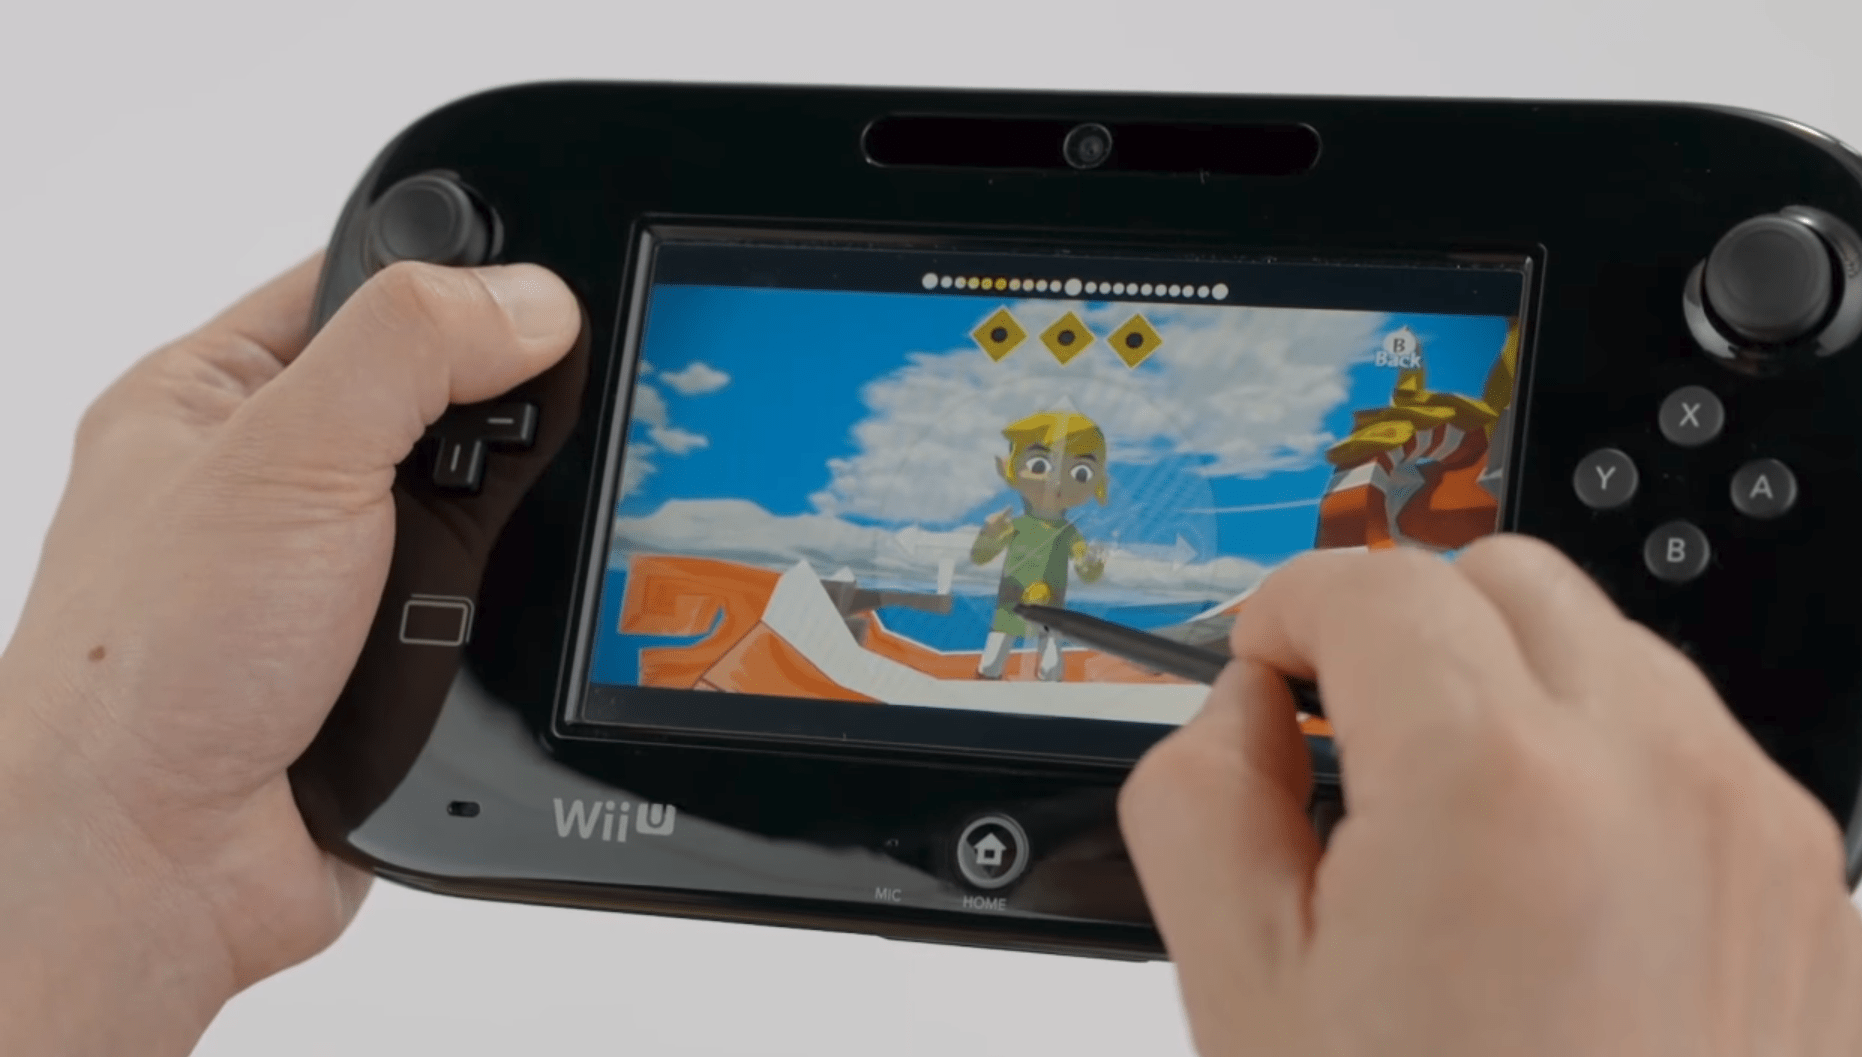 Wii U GamePad won't play Wii games